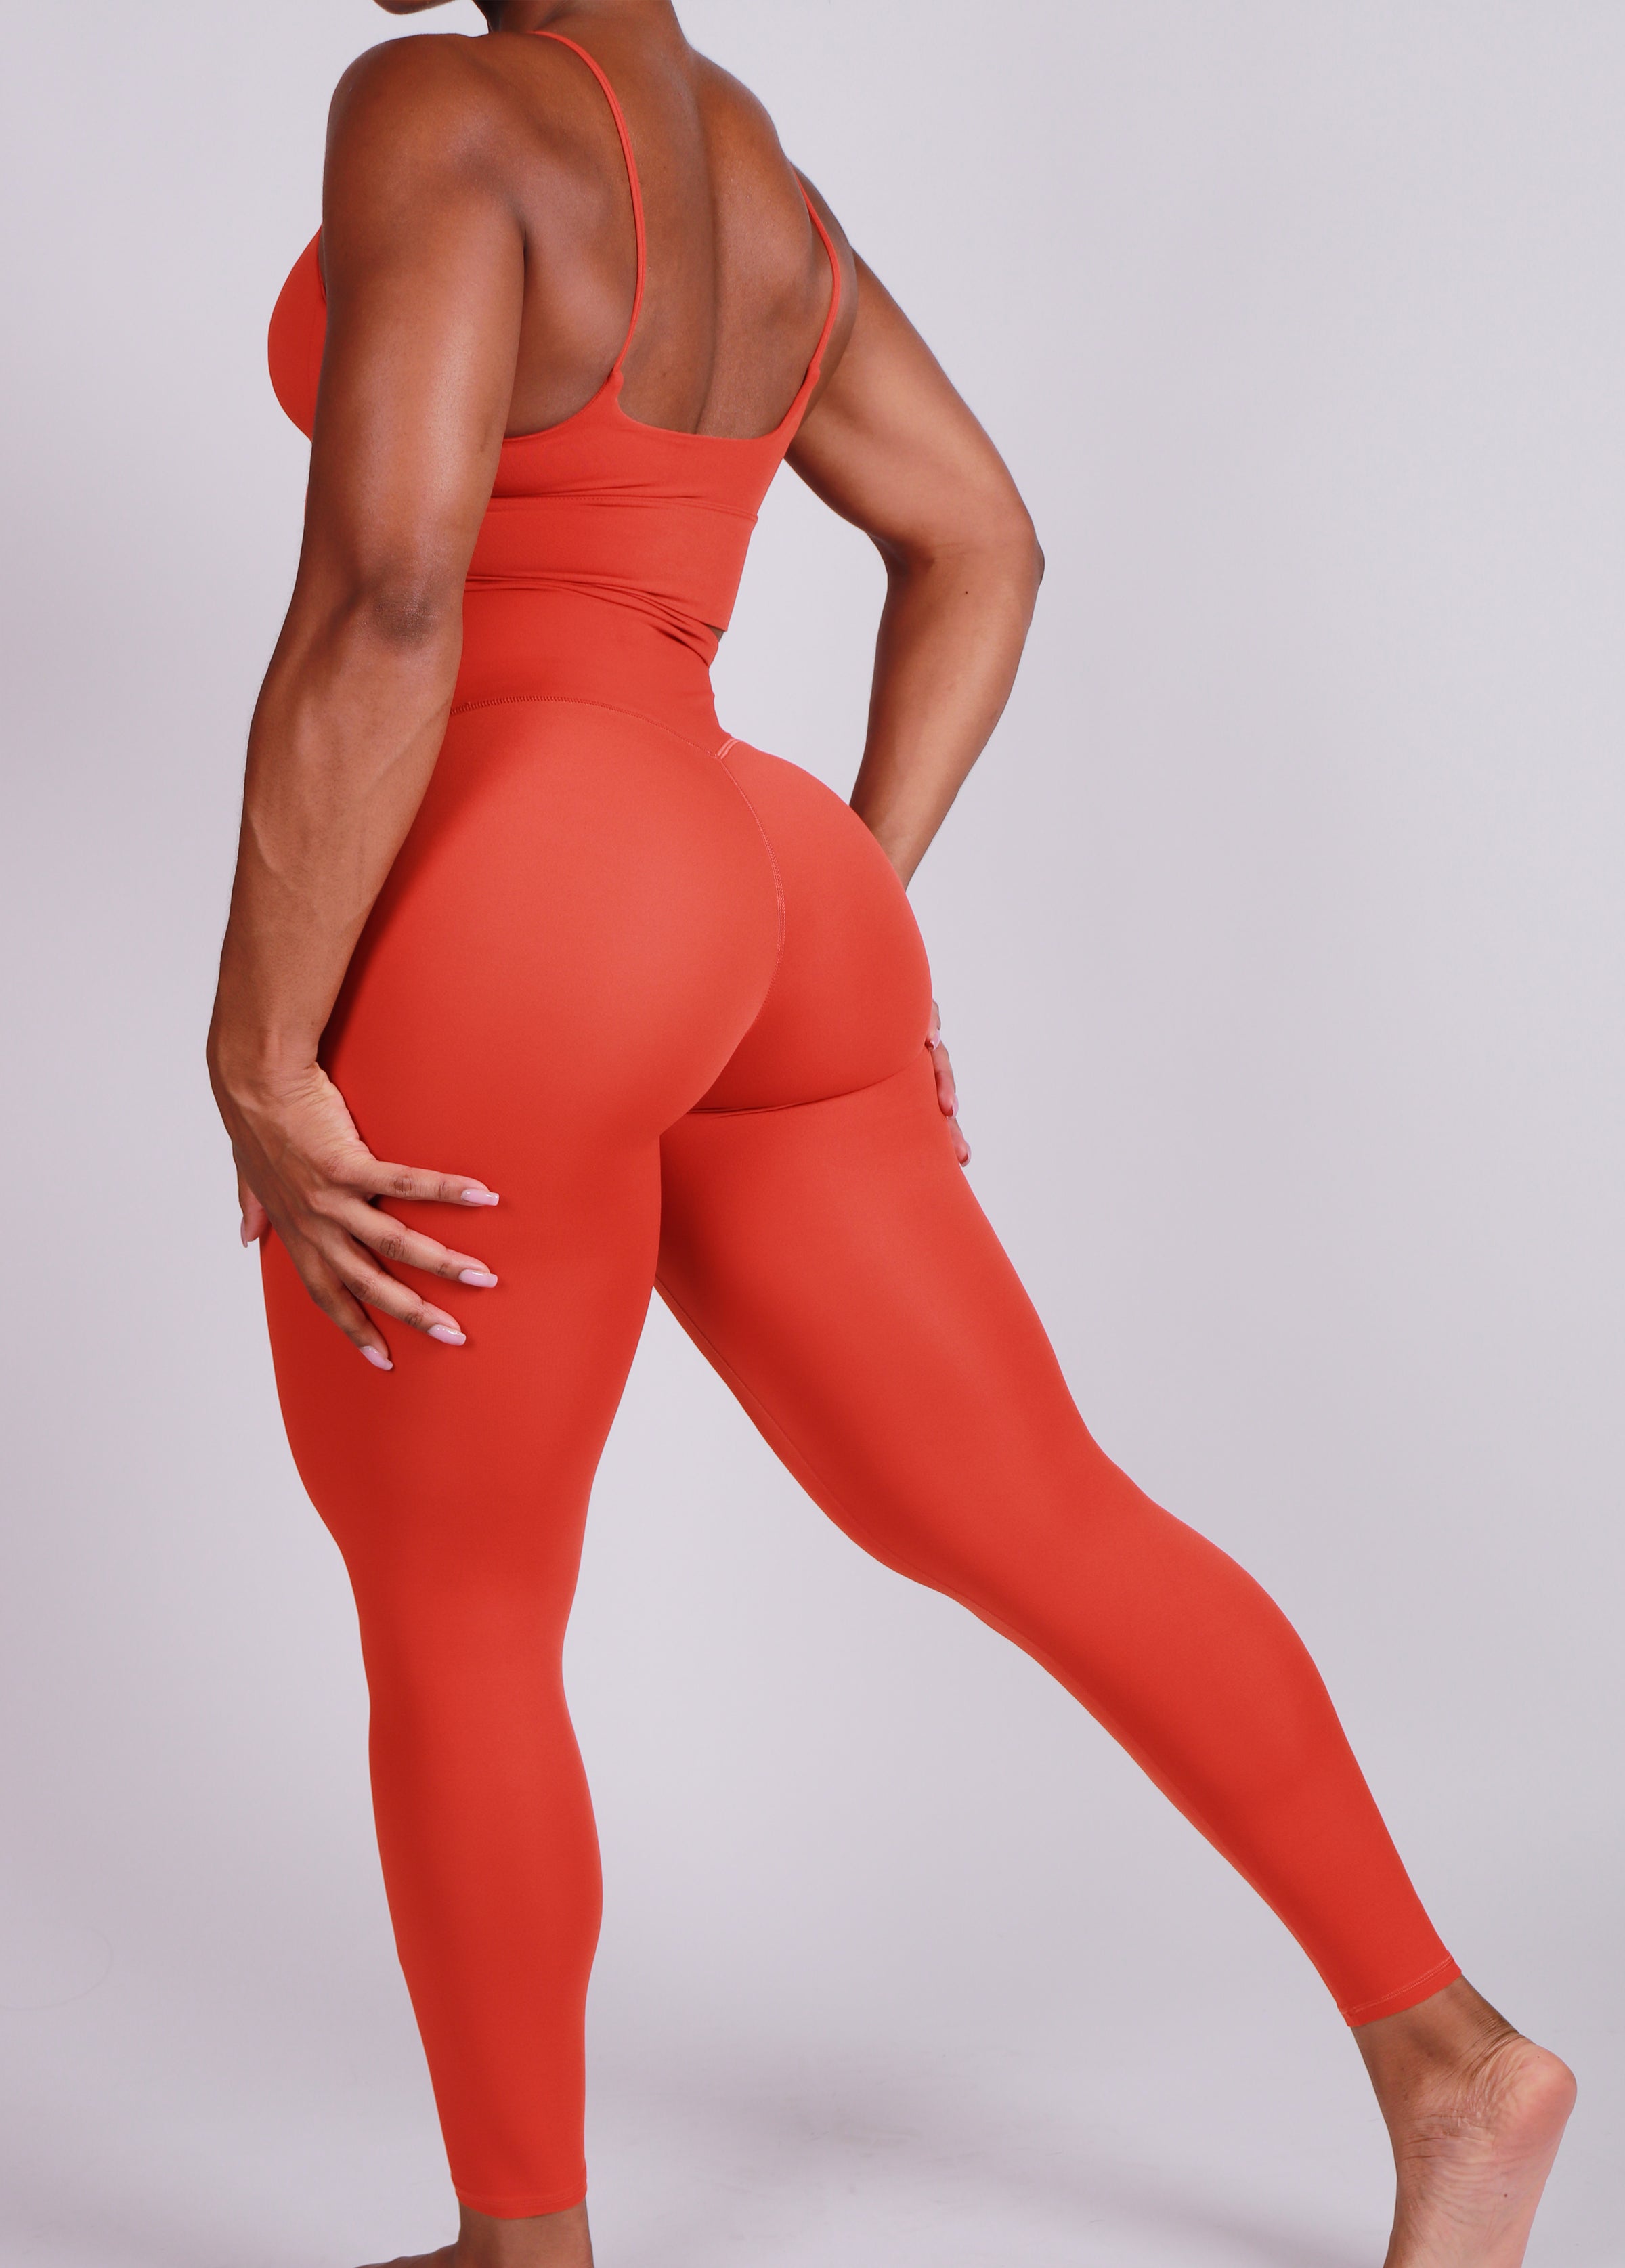 Leggings for Women Casual Tight Sports Colorful Geometric Print Ankle  Length Legging Orange L - Walmart.com